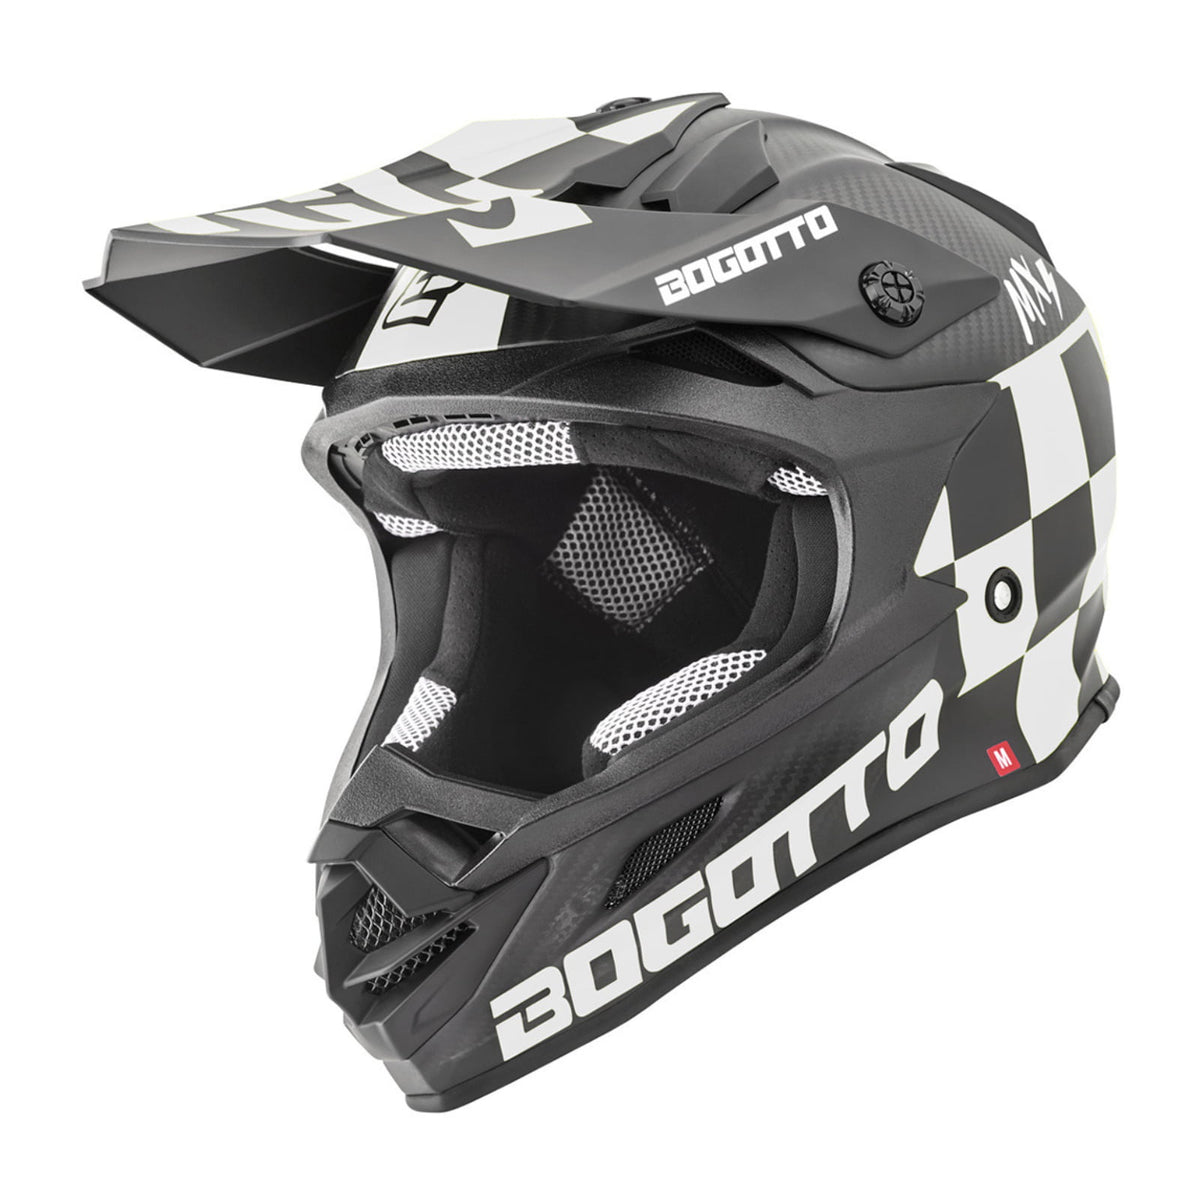 Bogotto V328 XADREZ CARBON MOTOCROSS HELMET（ボガット V328 シャドレス カーボンモトクロスヘルメット）（ブラック／ホワイト）オフロードヘルメット 斜めから左側